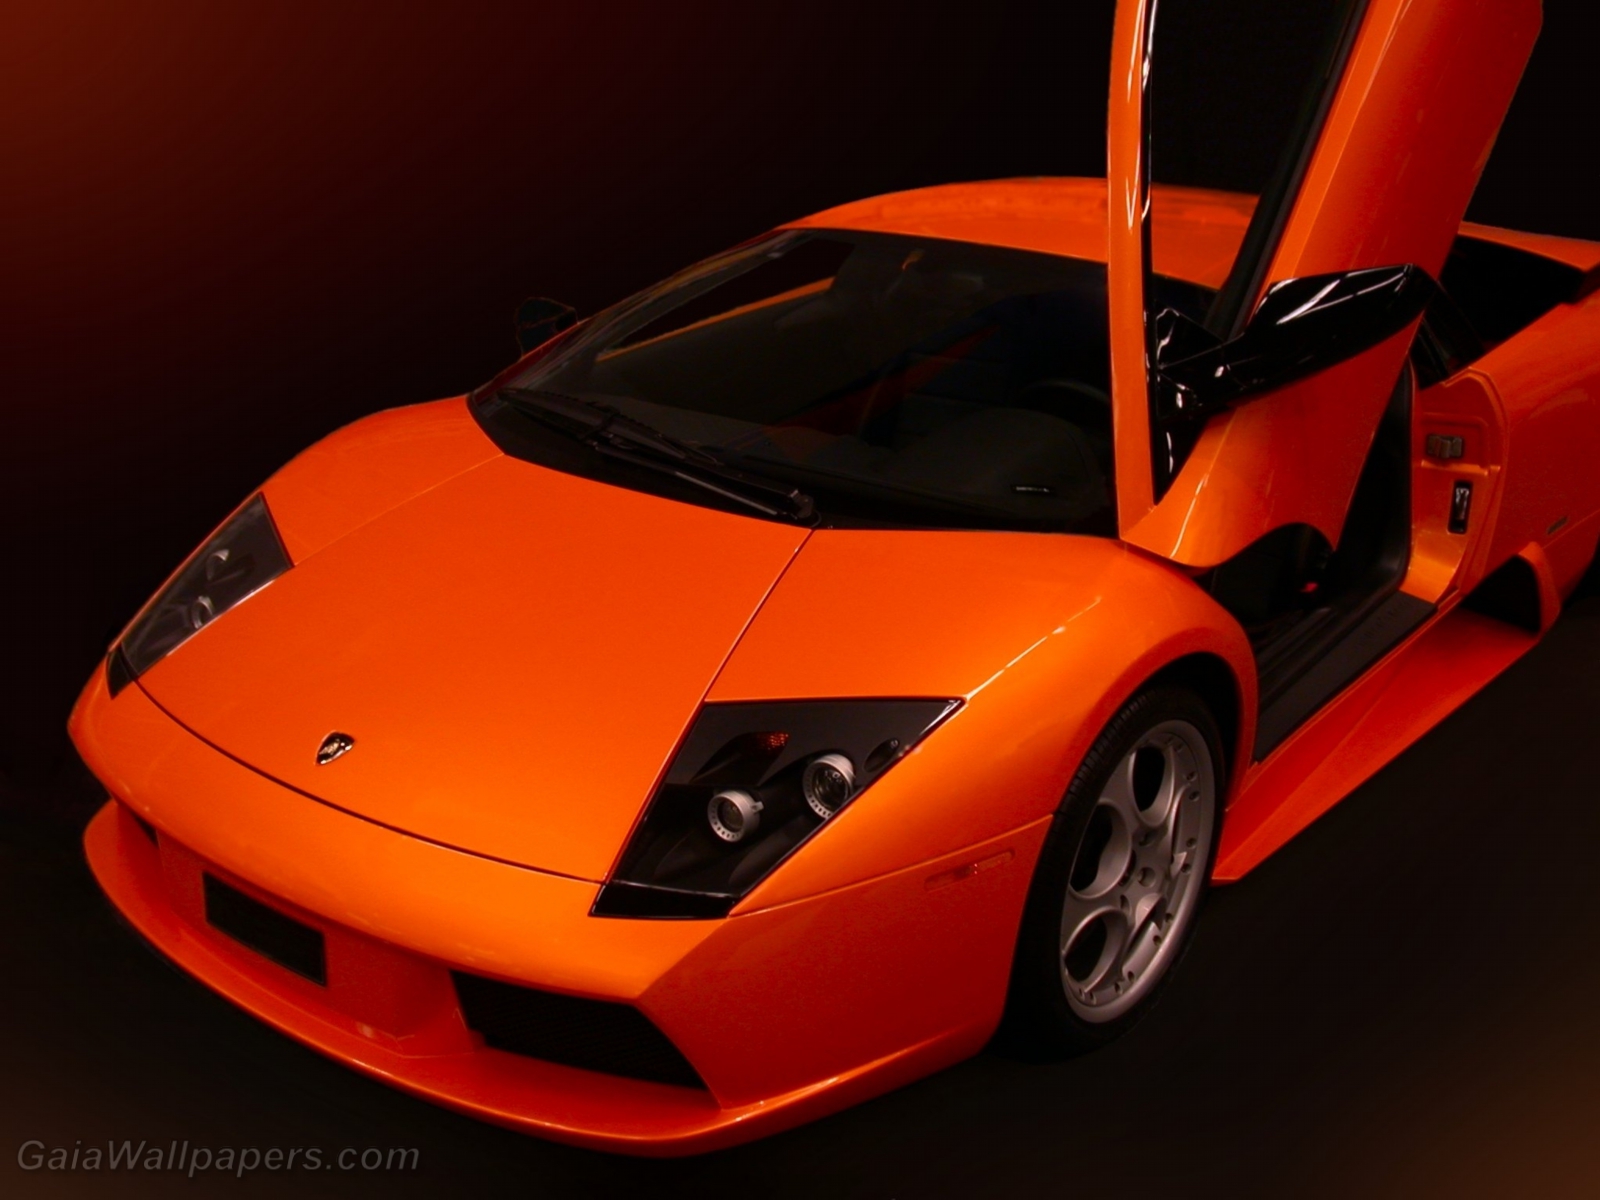 Wallpaper ID: 399726 / Vehicles Lamborghini Murciélago Phone Wallpaper, ,  1080x1920 free download